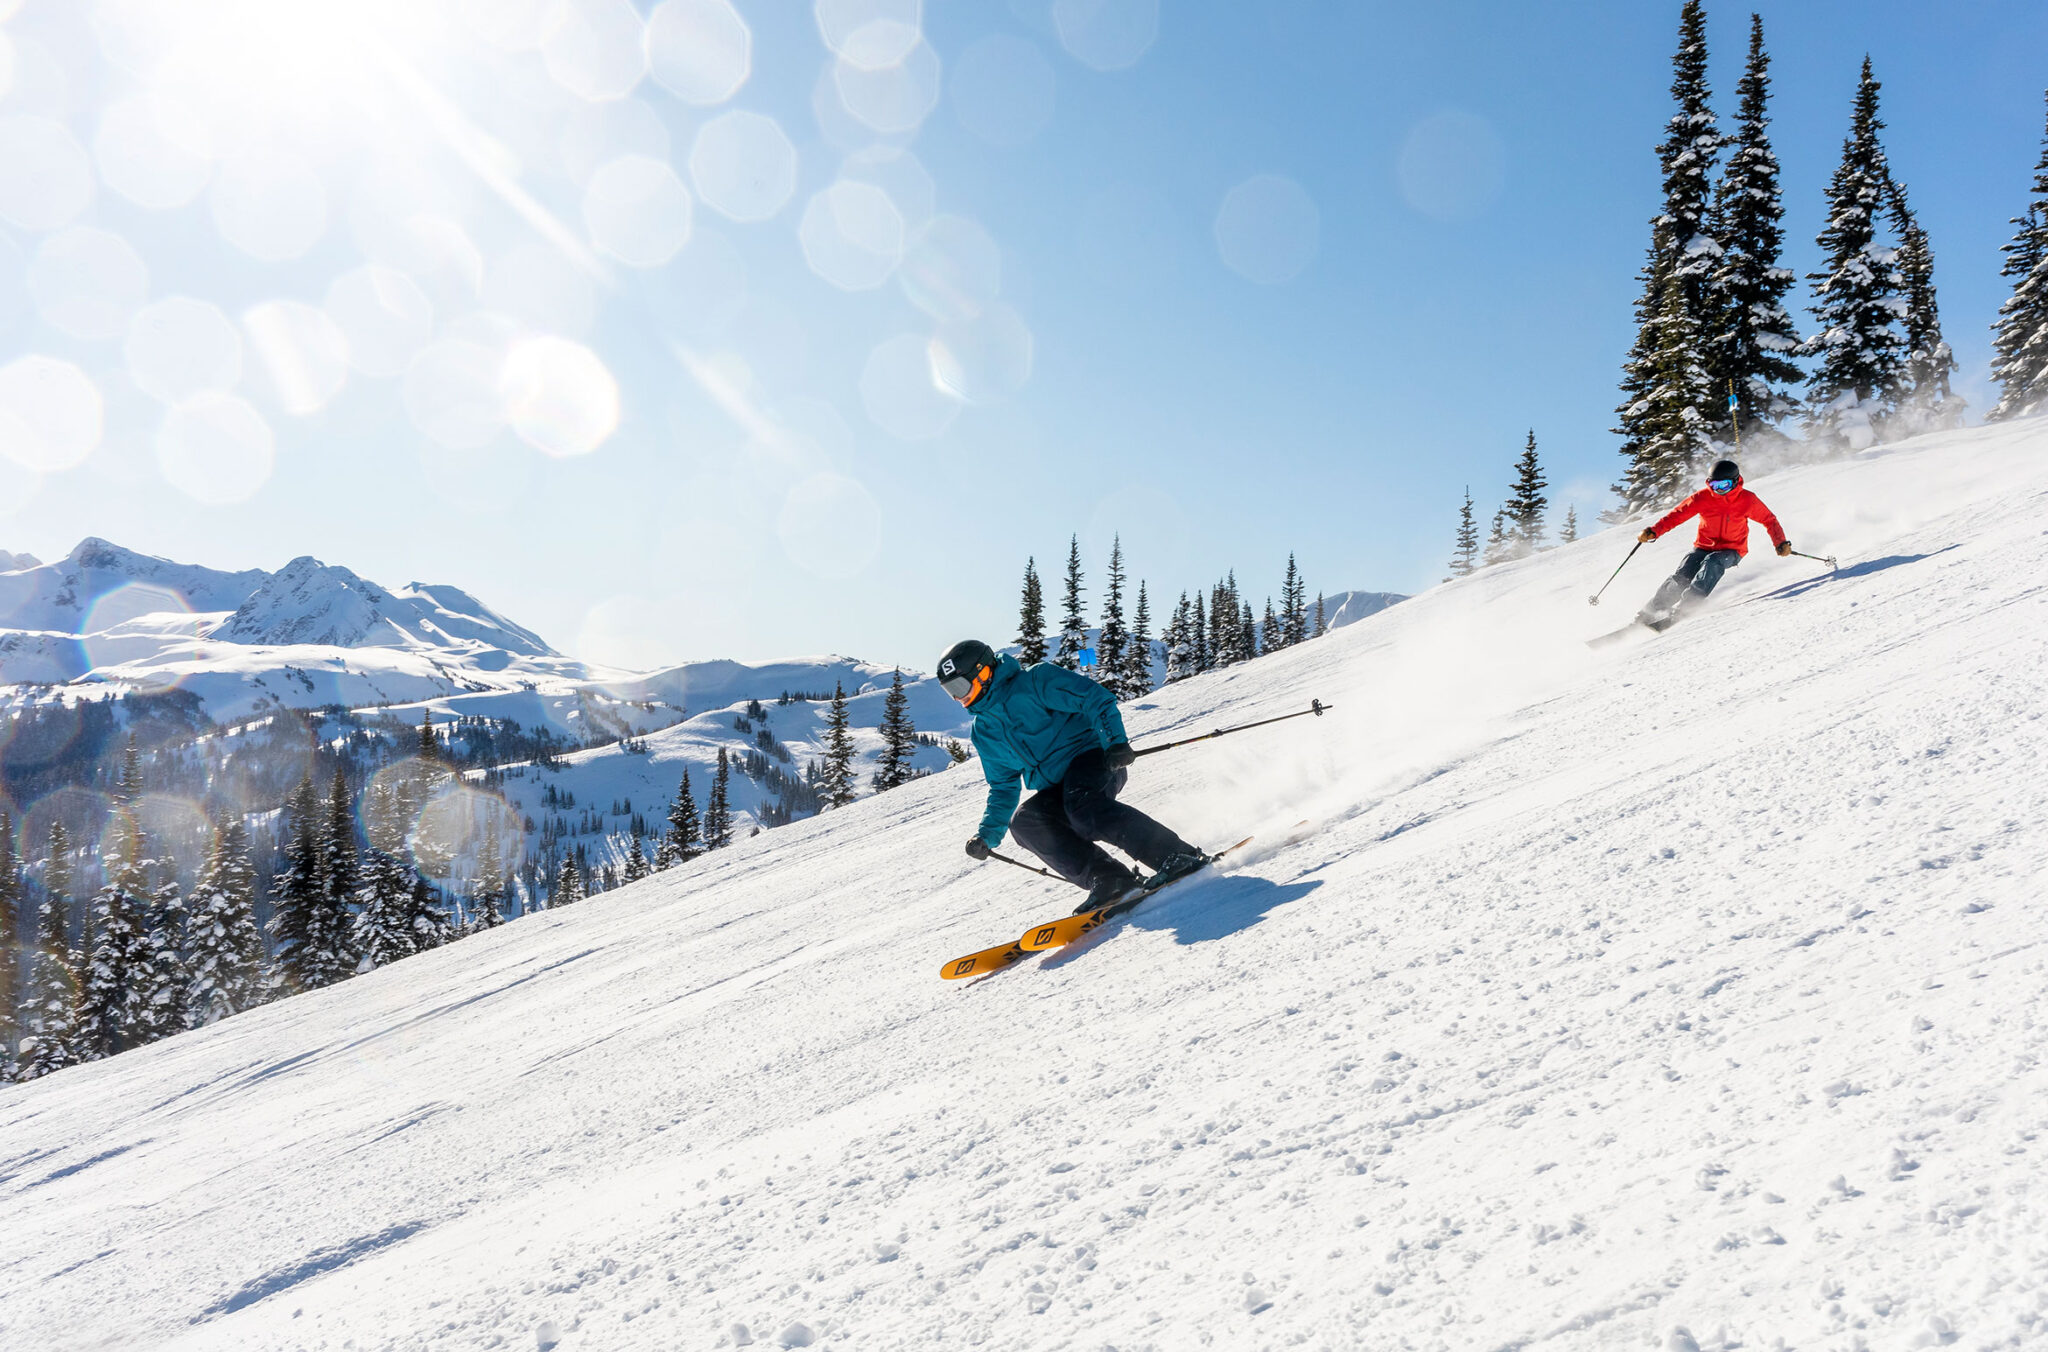 Skiers enjoy the sunshine as they ski down the slopes on Whistler Blackcomb.